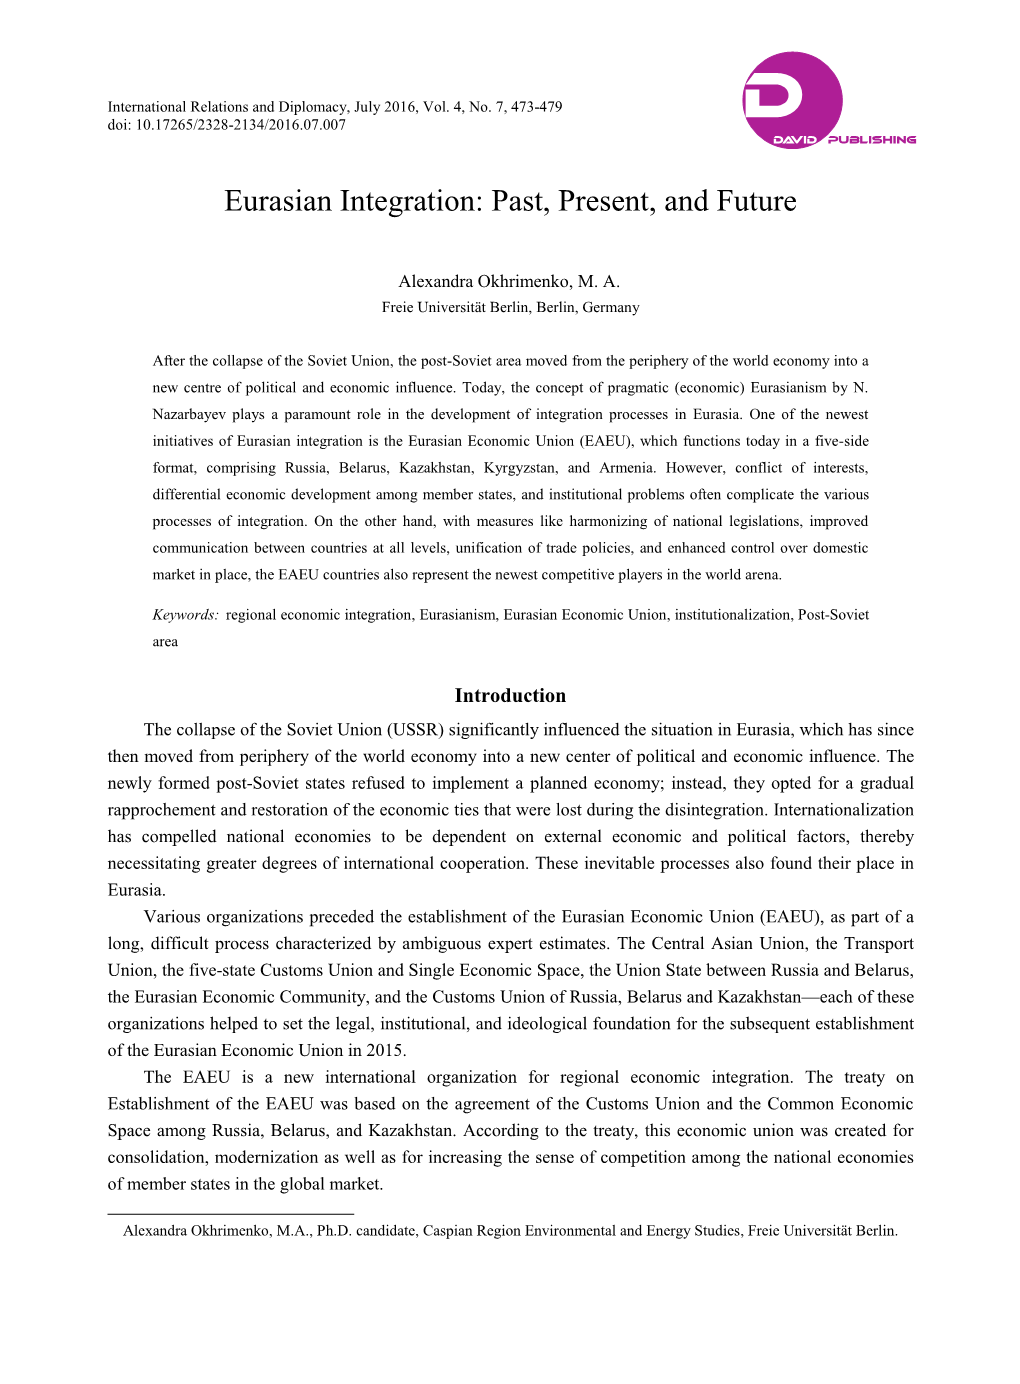 Eurasian Integration: Past, Present, and Future